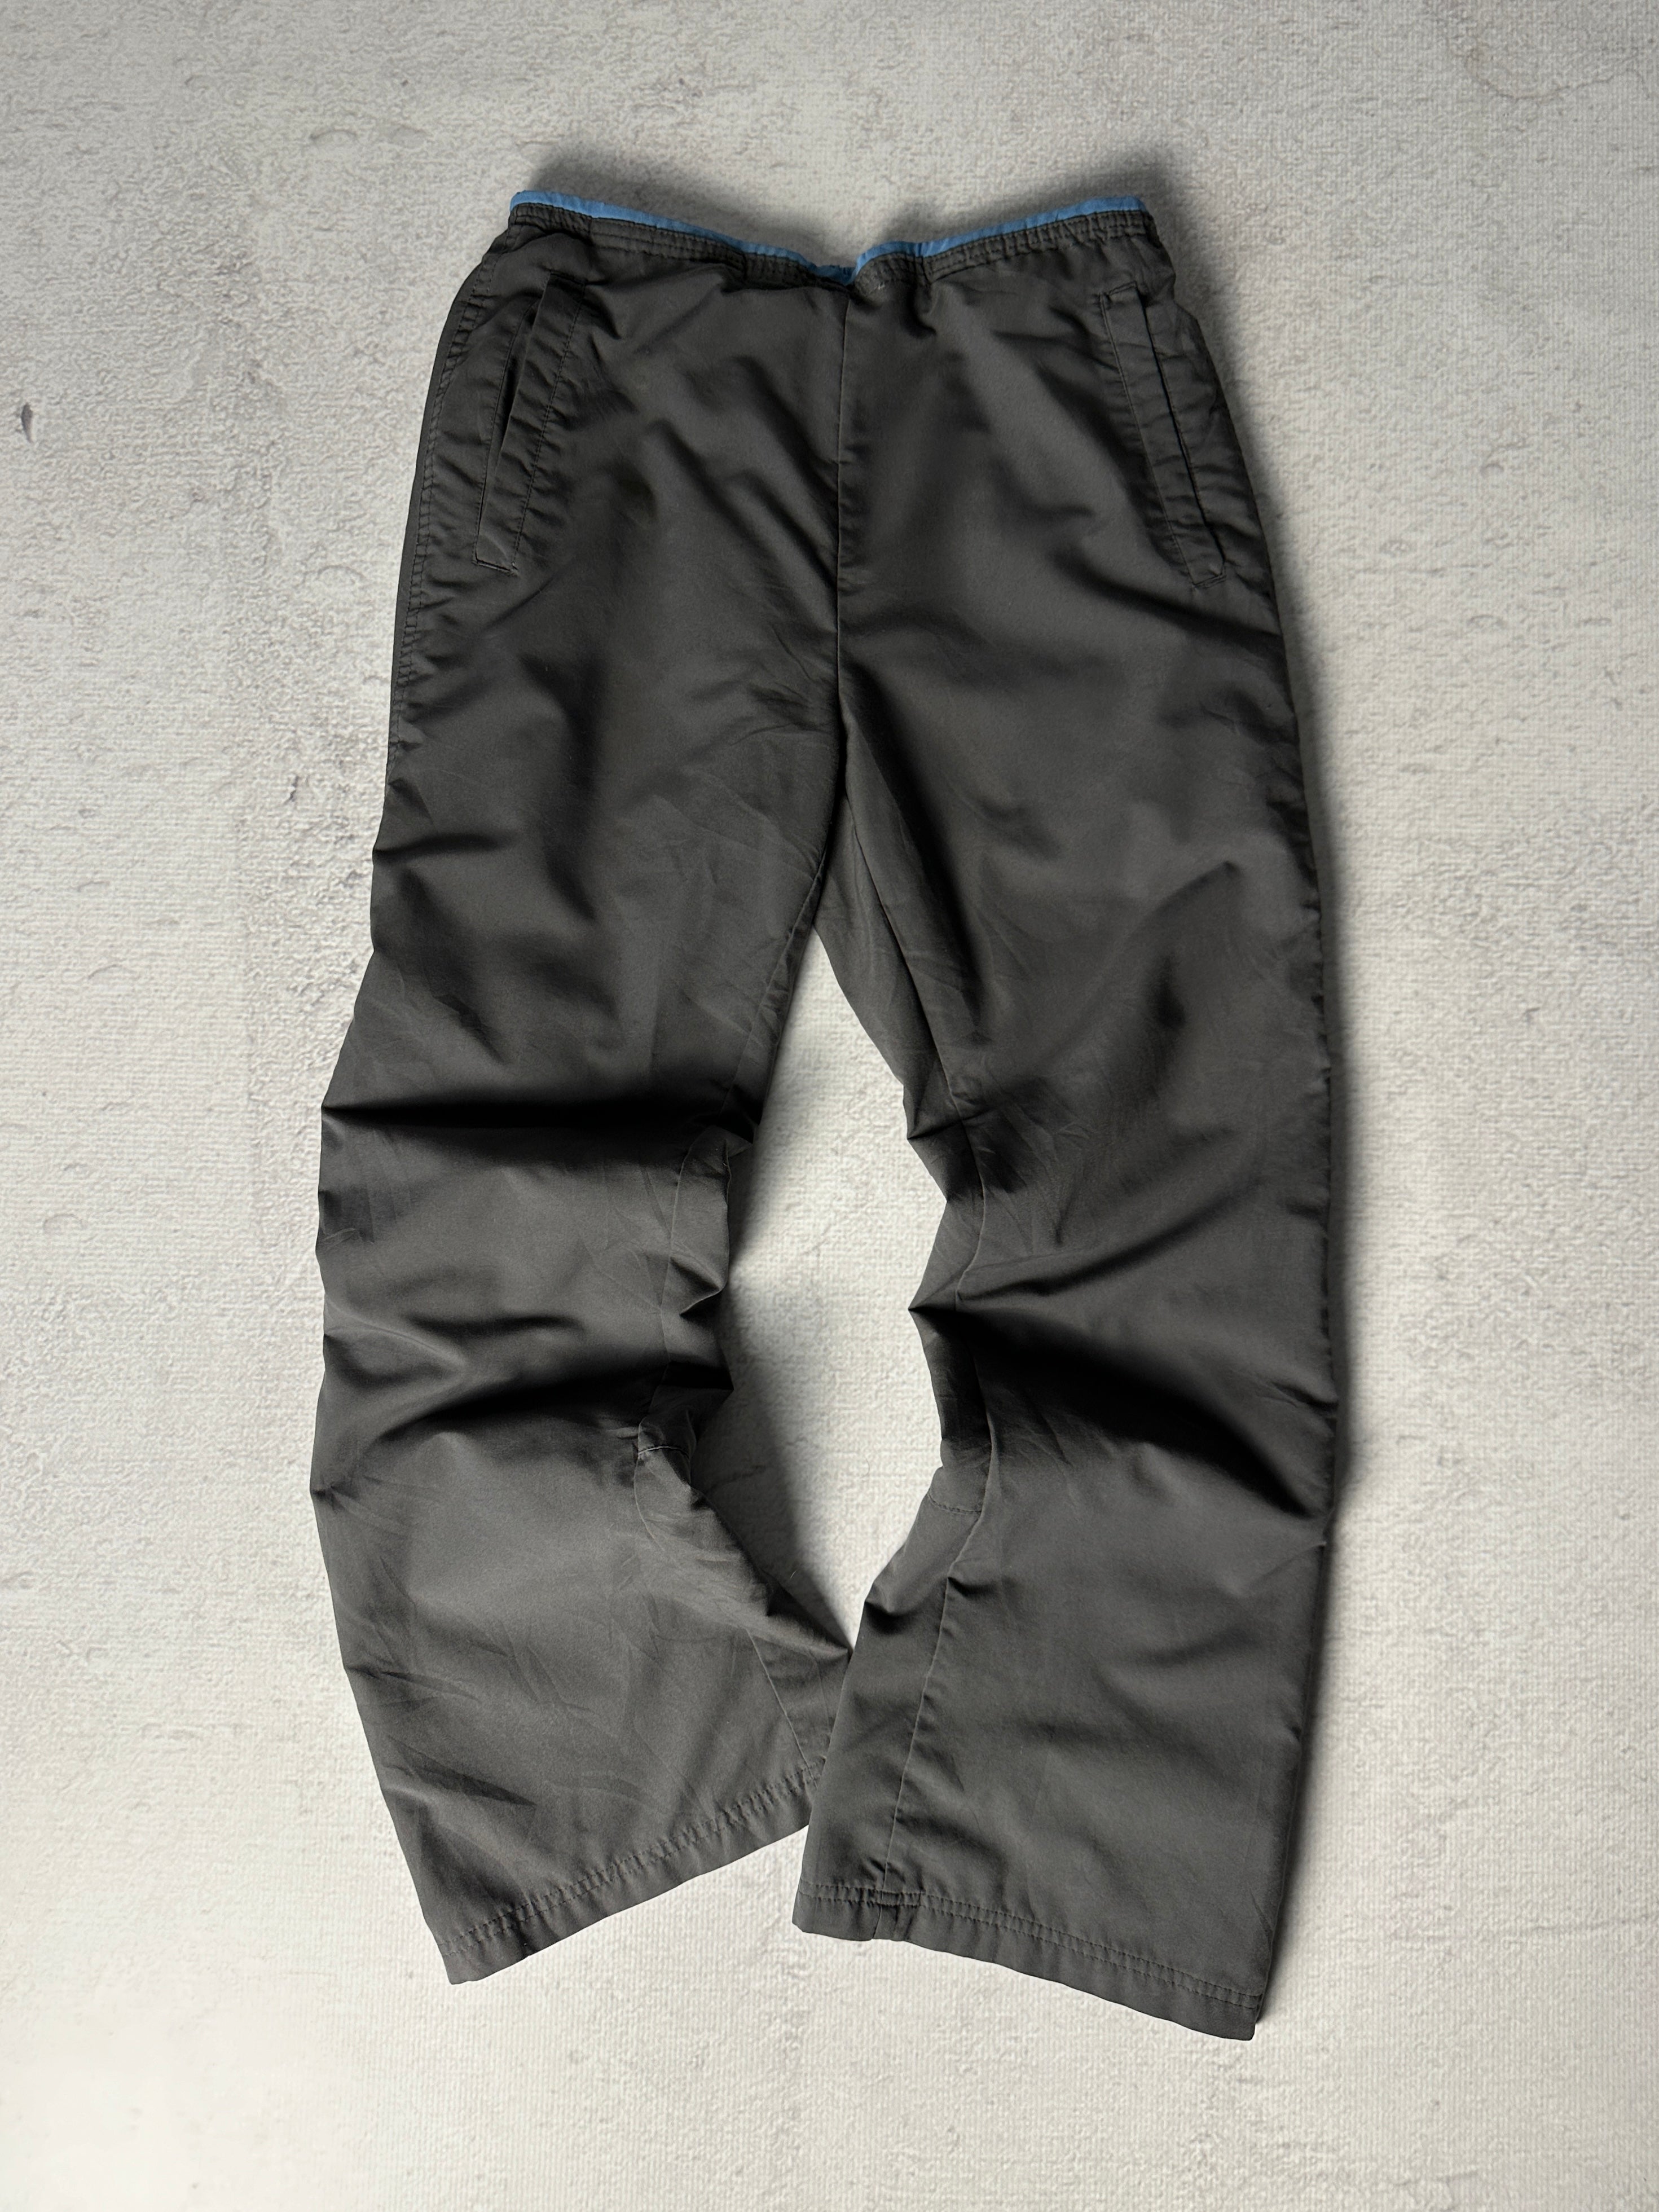 Vintage Reebok Track Pants - Women's Small